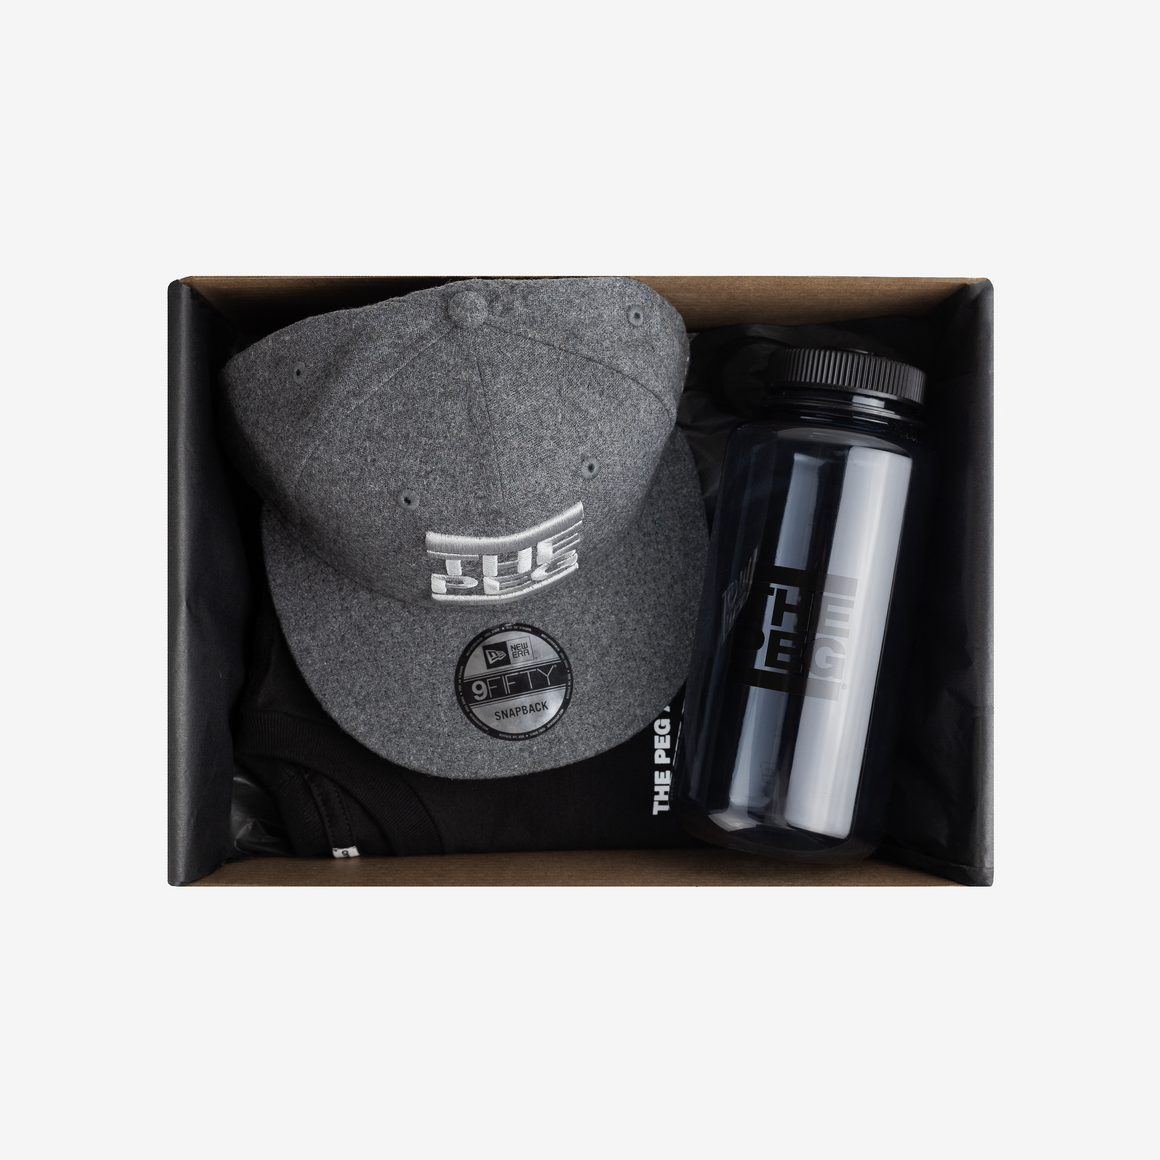 The Peg Gift Box (Grey, Black)